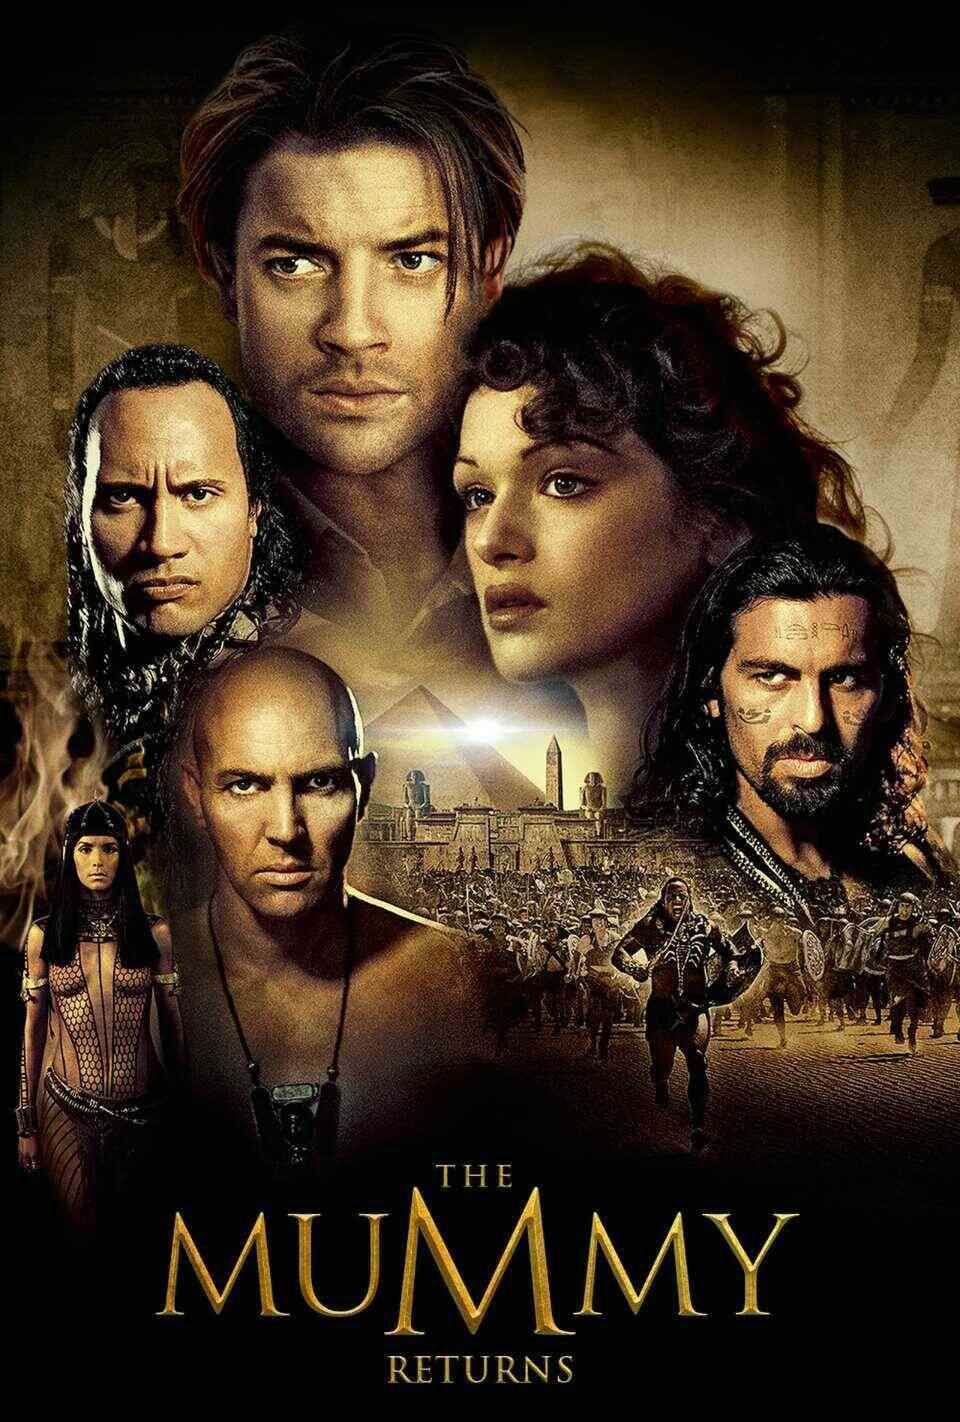 Read The Mummy Returns screenplay (poster)